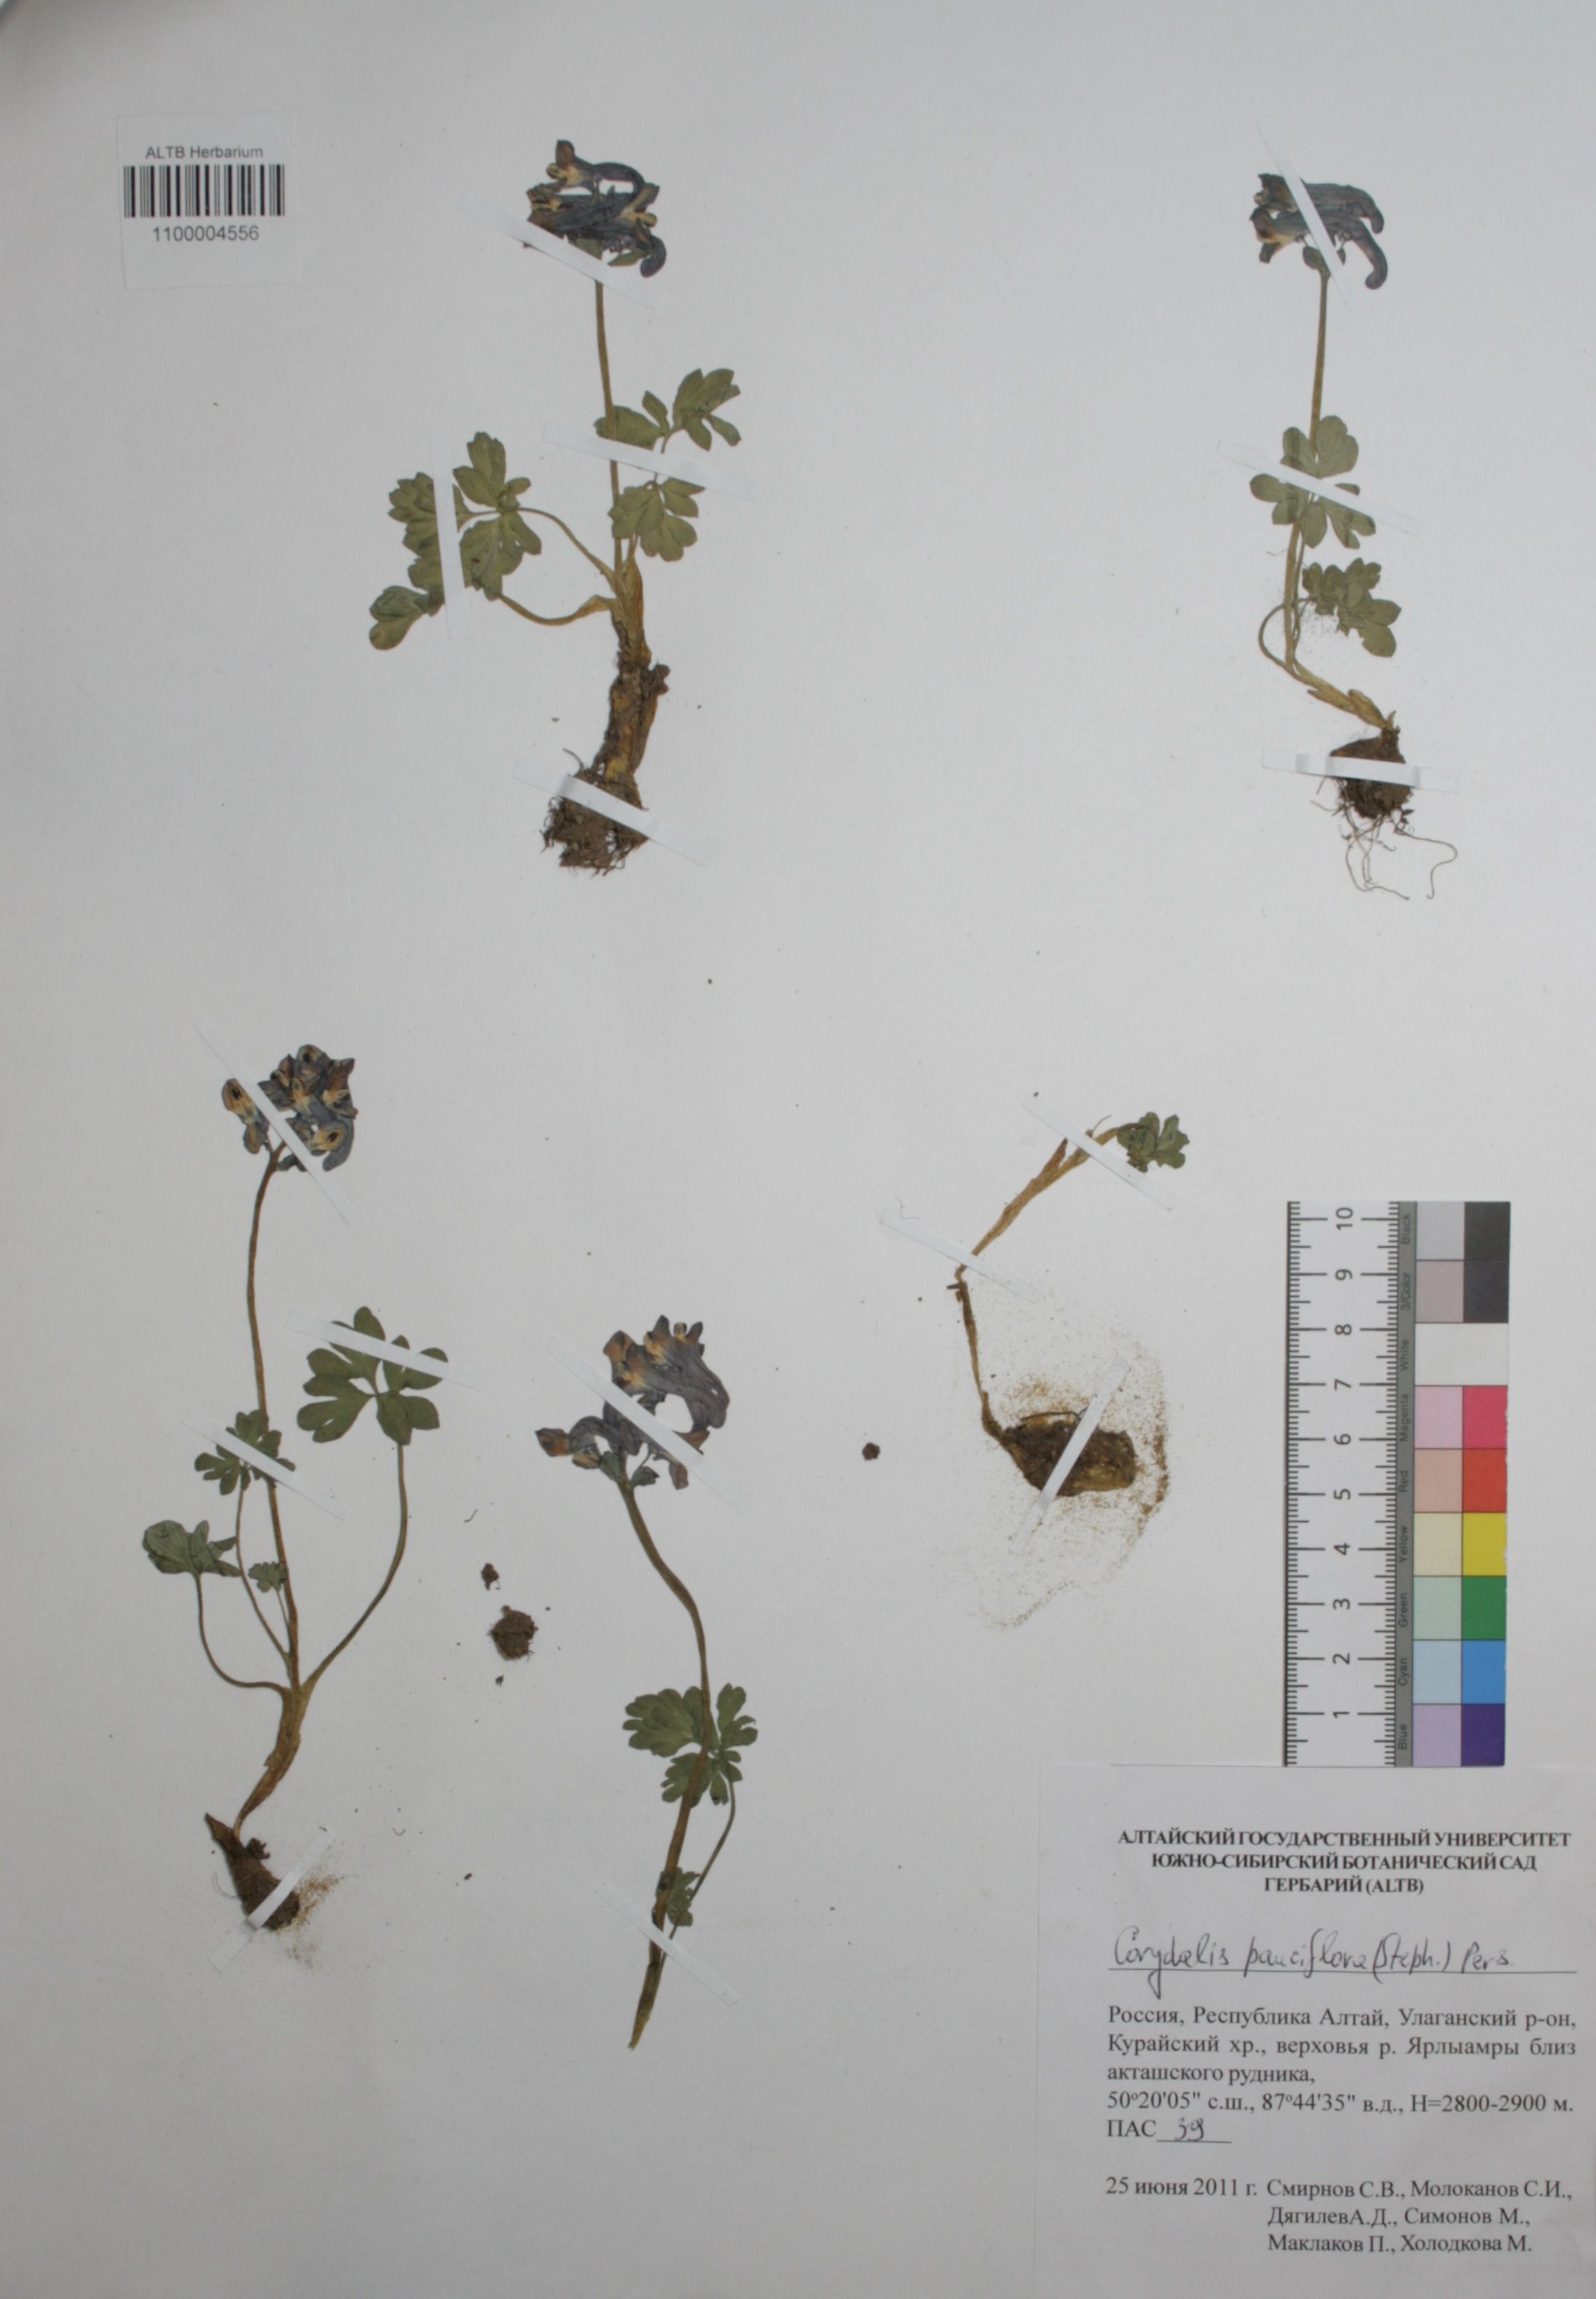 Fumariaceae,Corydalis pauciflora (Steph.) Pers.